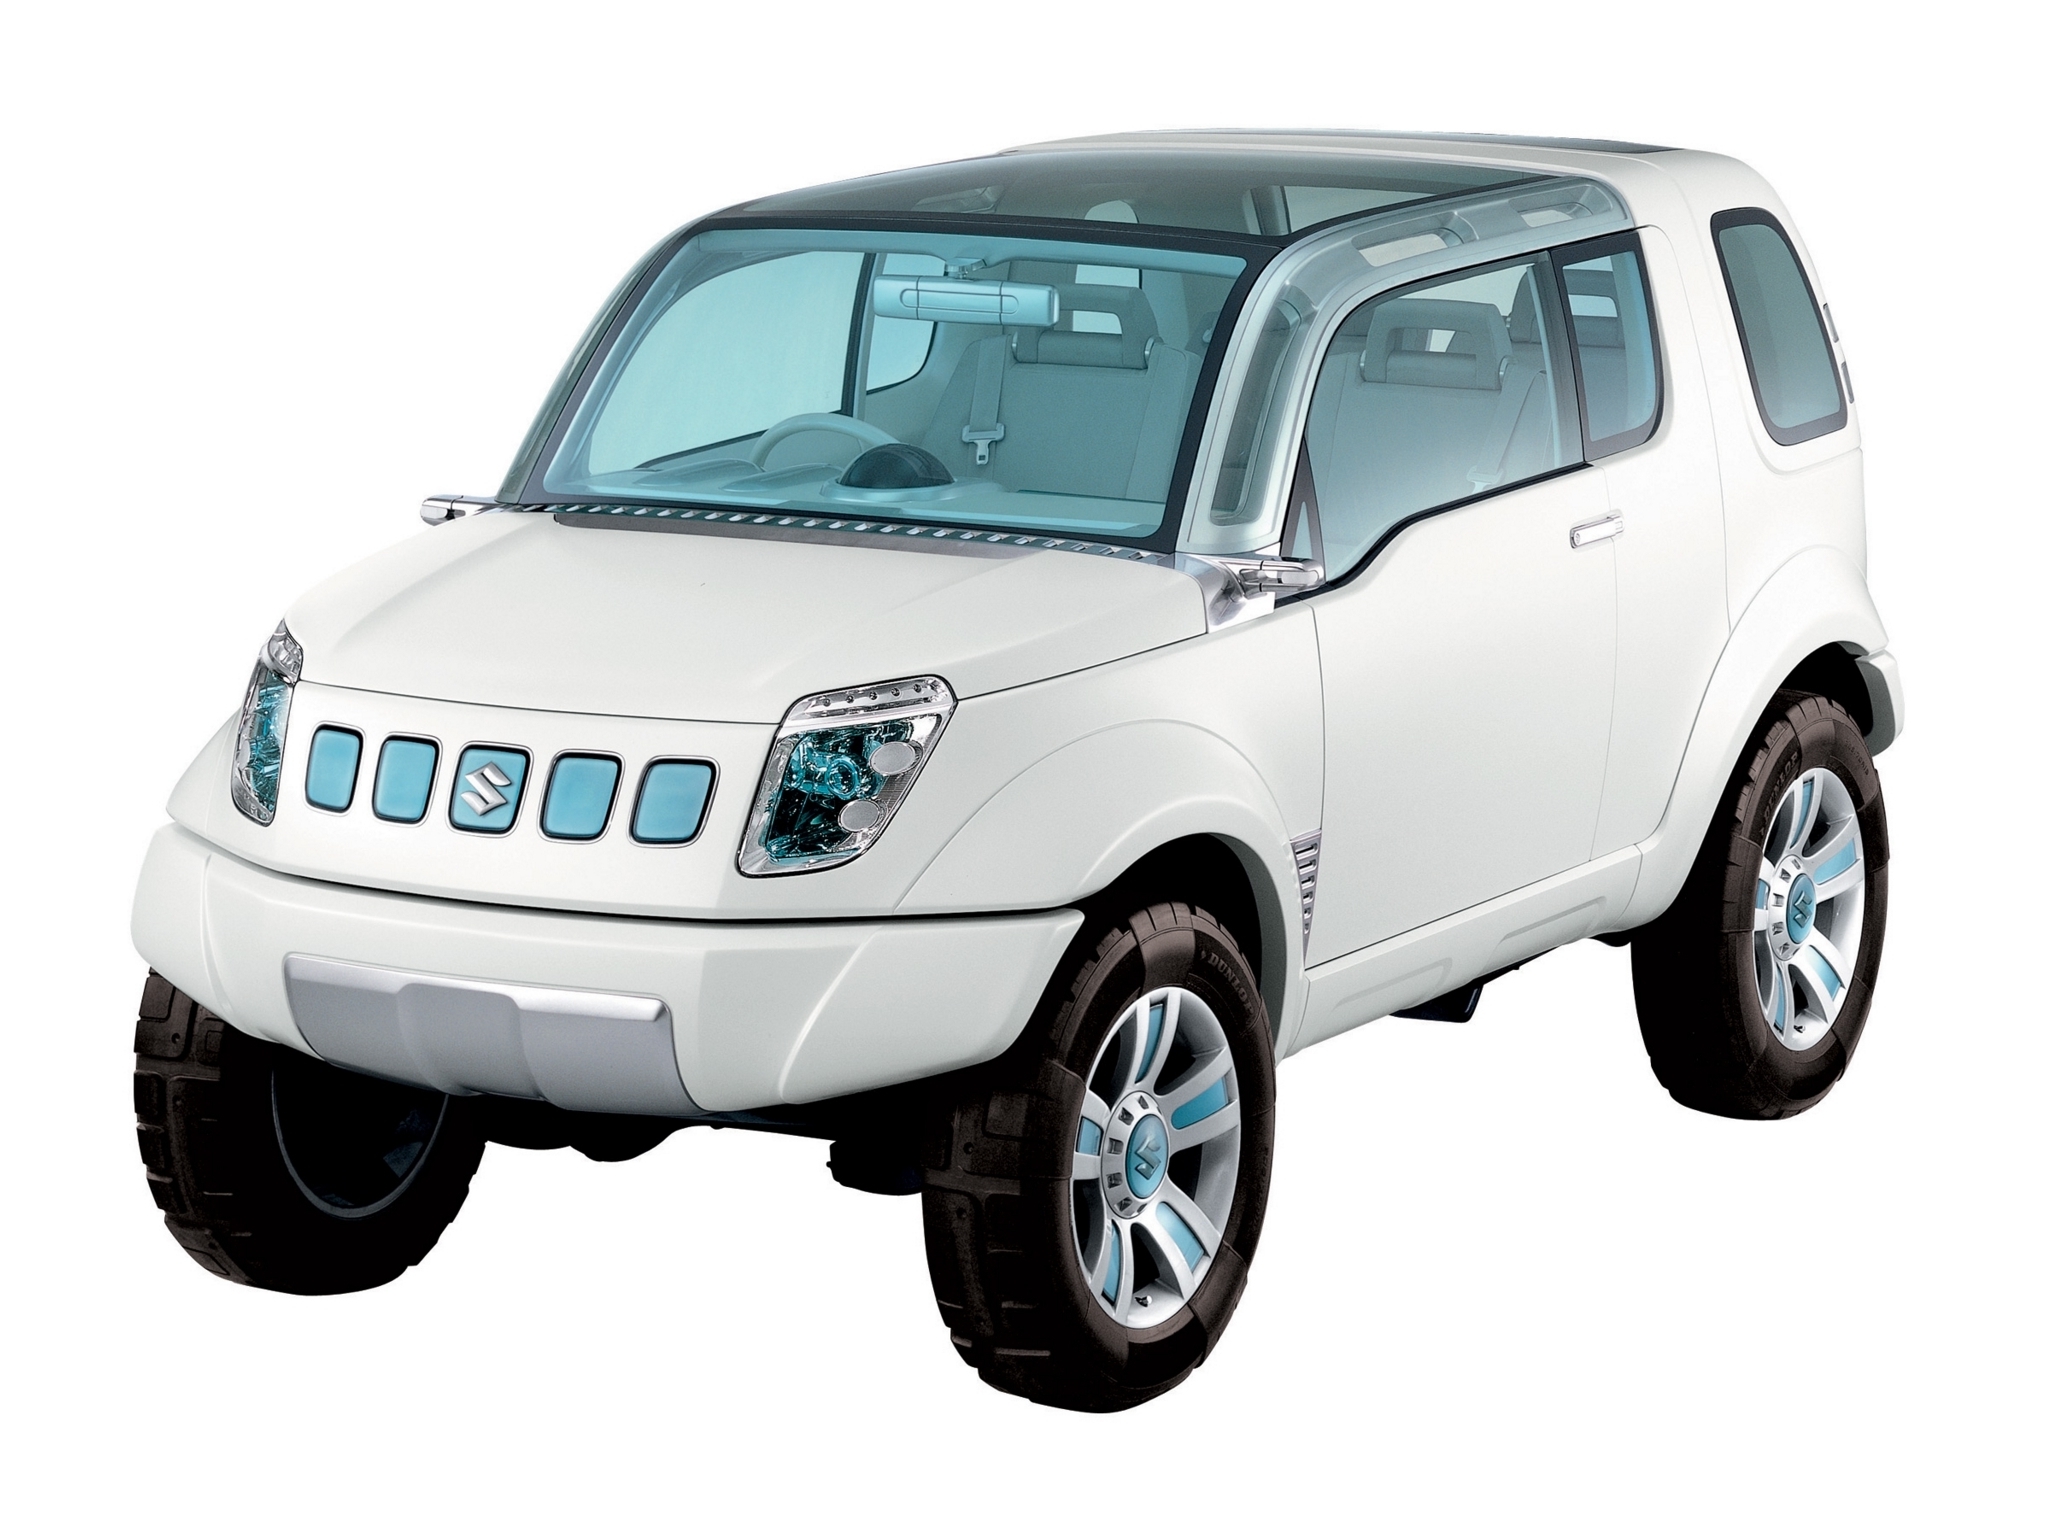 Suzuki Landbreeze Concept, 2003